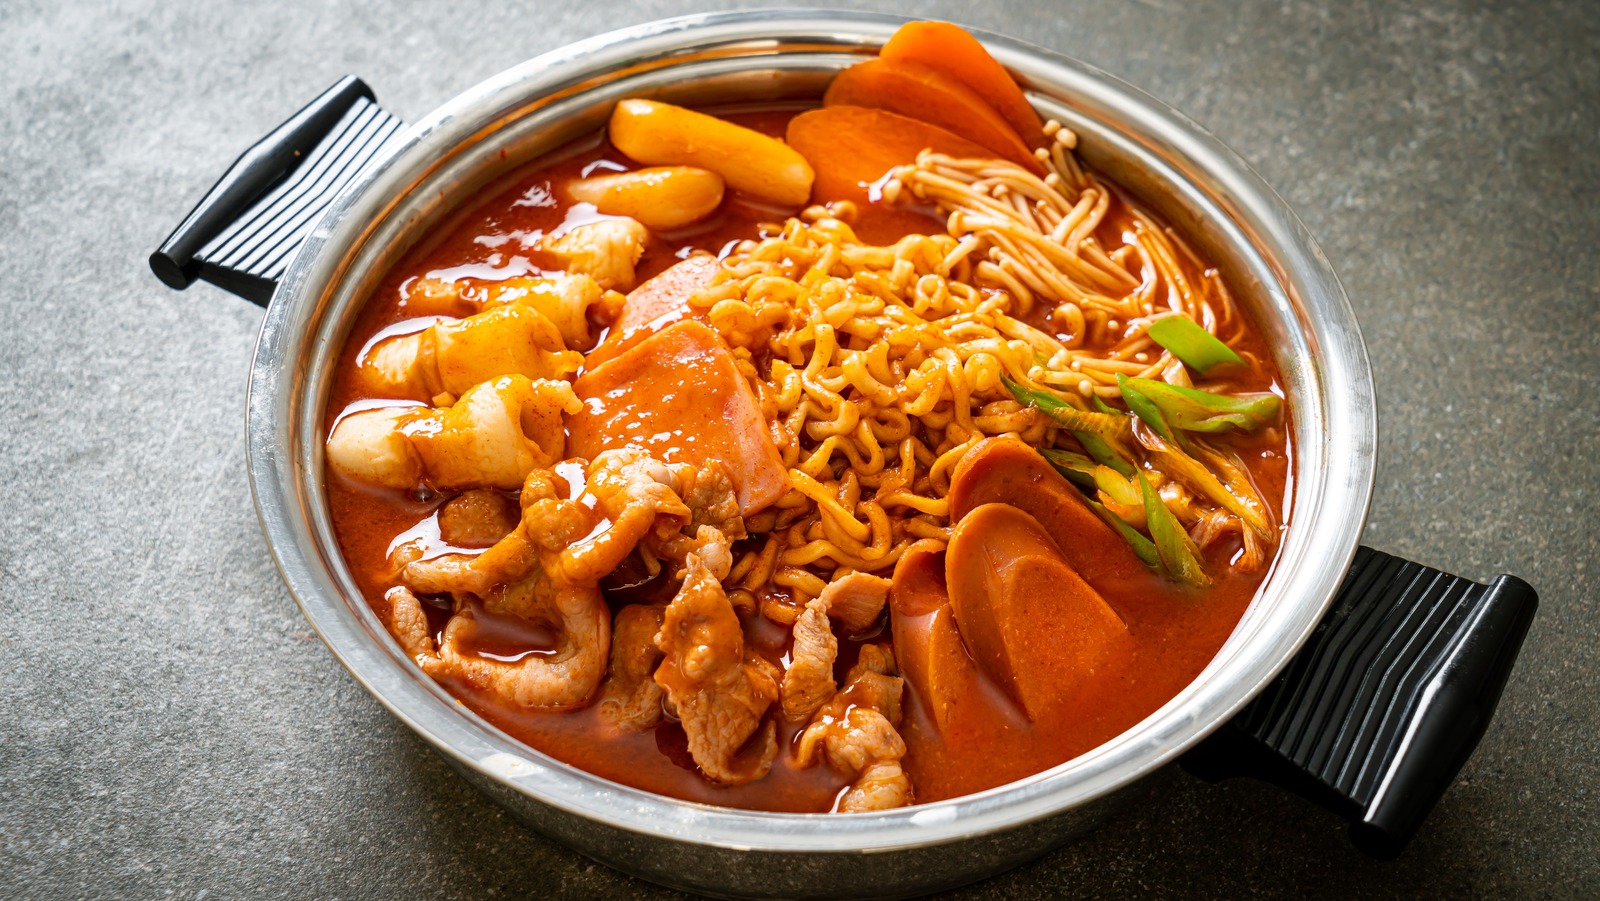 https://www.tastingtable.com/img/gallery/budae-jjigae-the-korean-army-base-stew-that-became-a-comfort-food/l-intro-1666470730.jpg